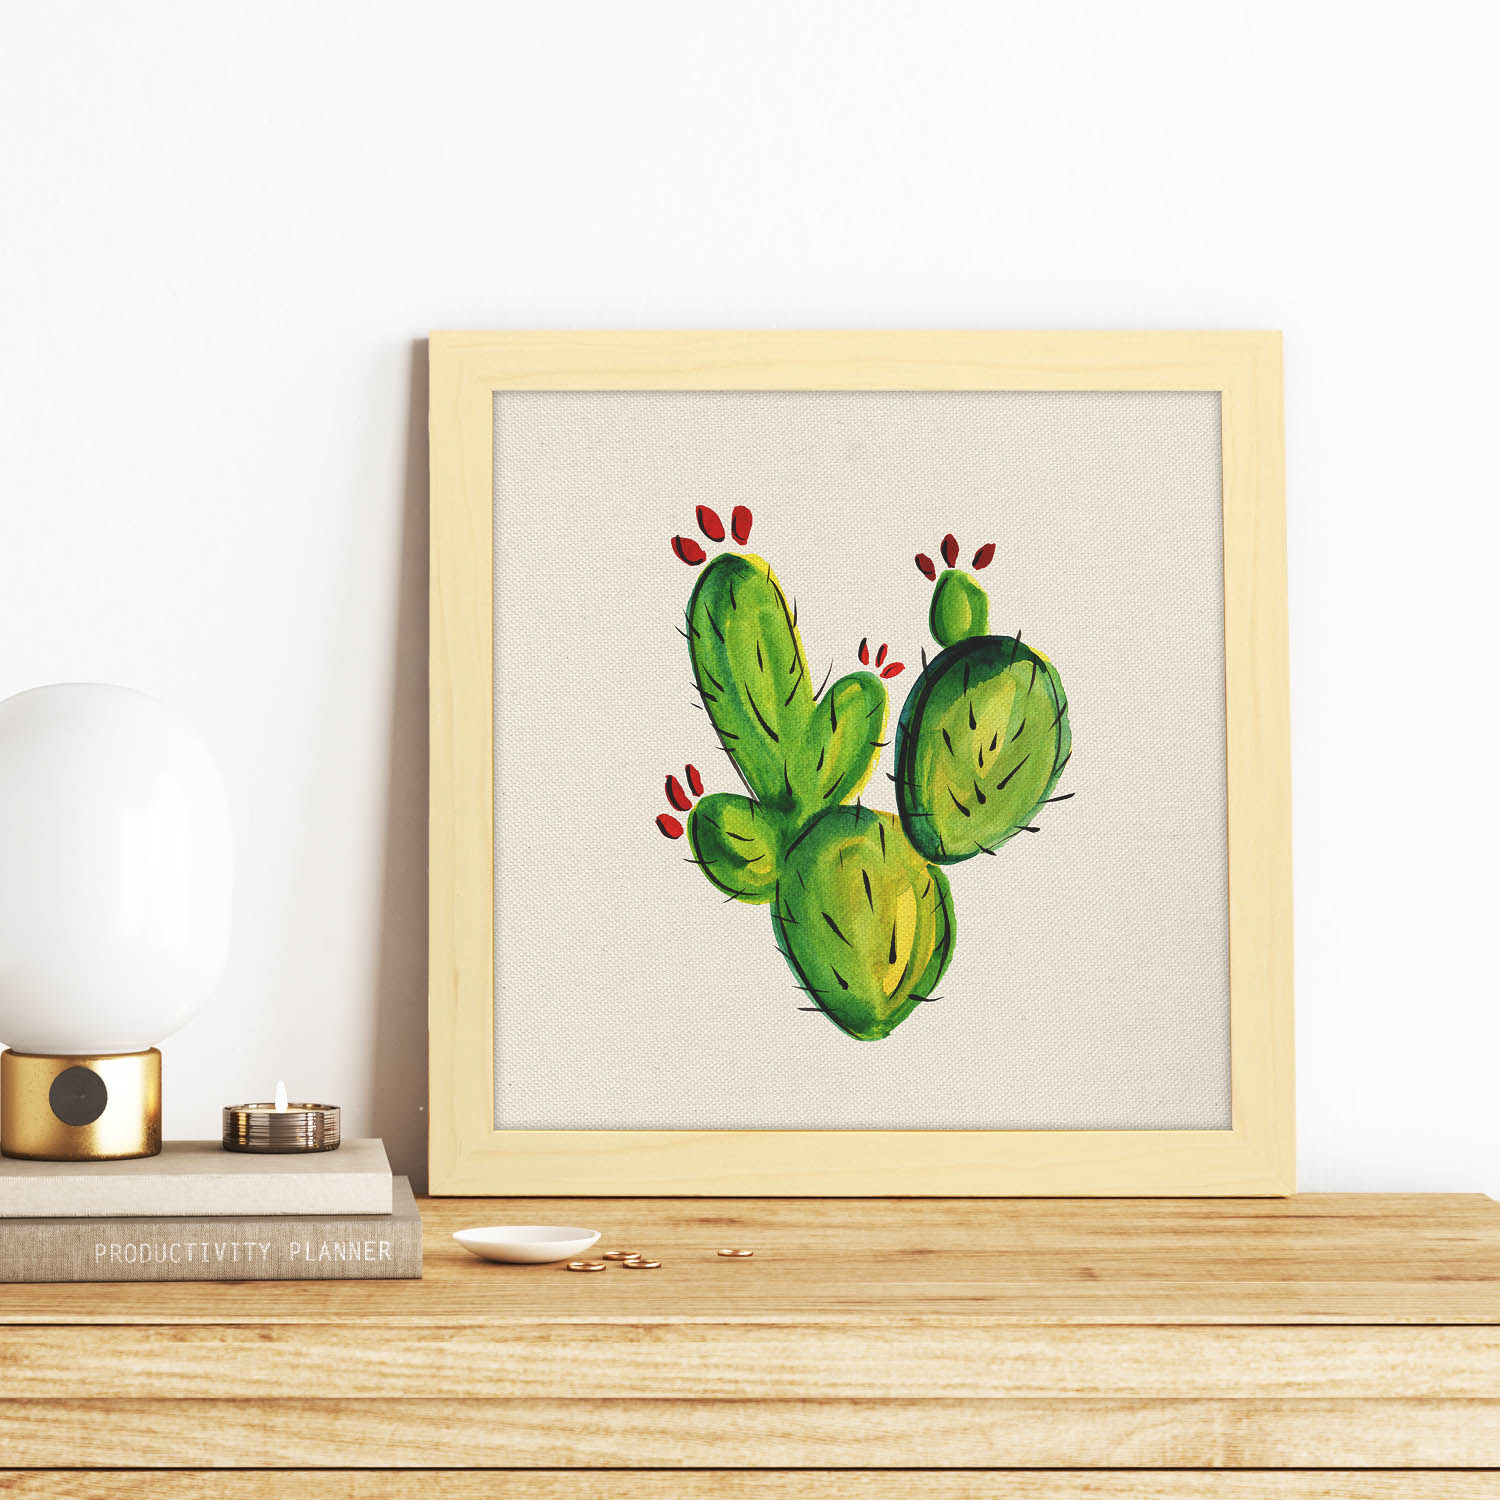 Poster de cactus dibujado. Lámina de Mírame, no me toques-Artwork-Nacnic-Nacnic Estudio SL